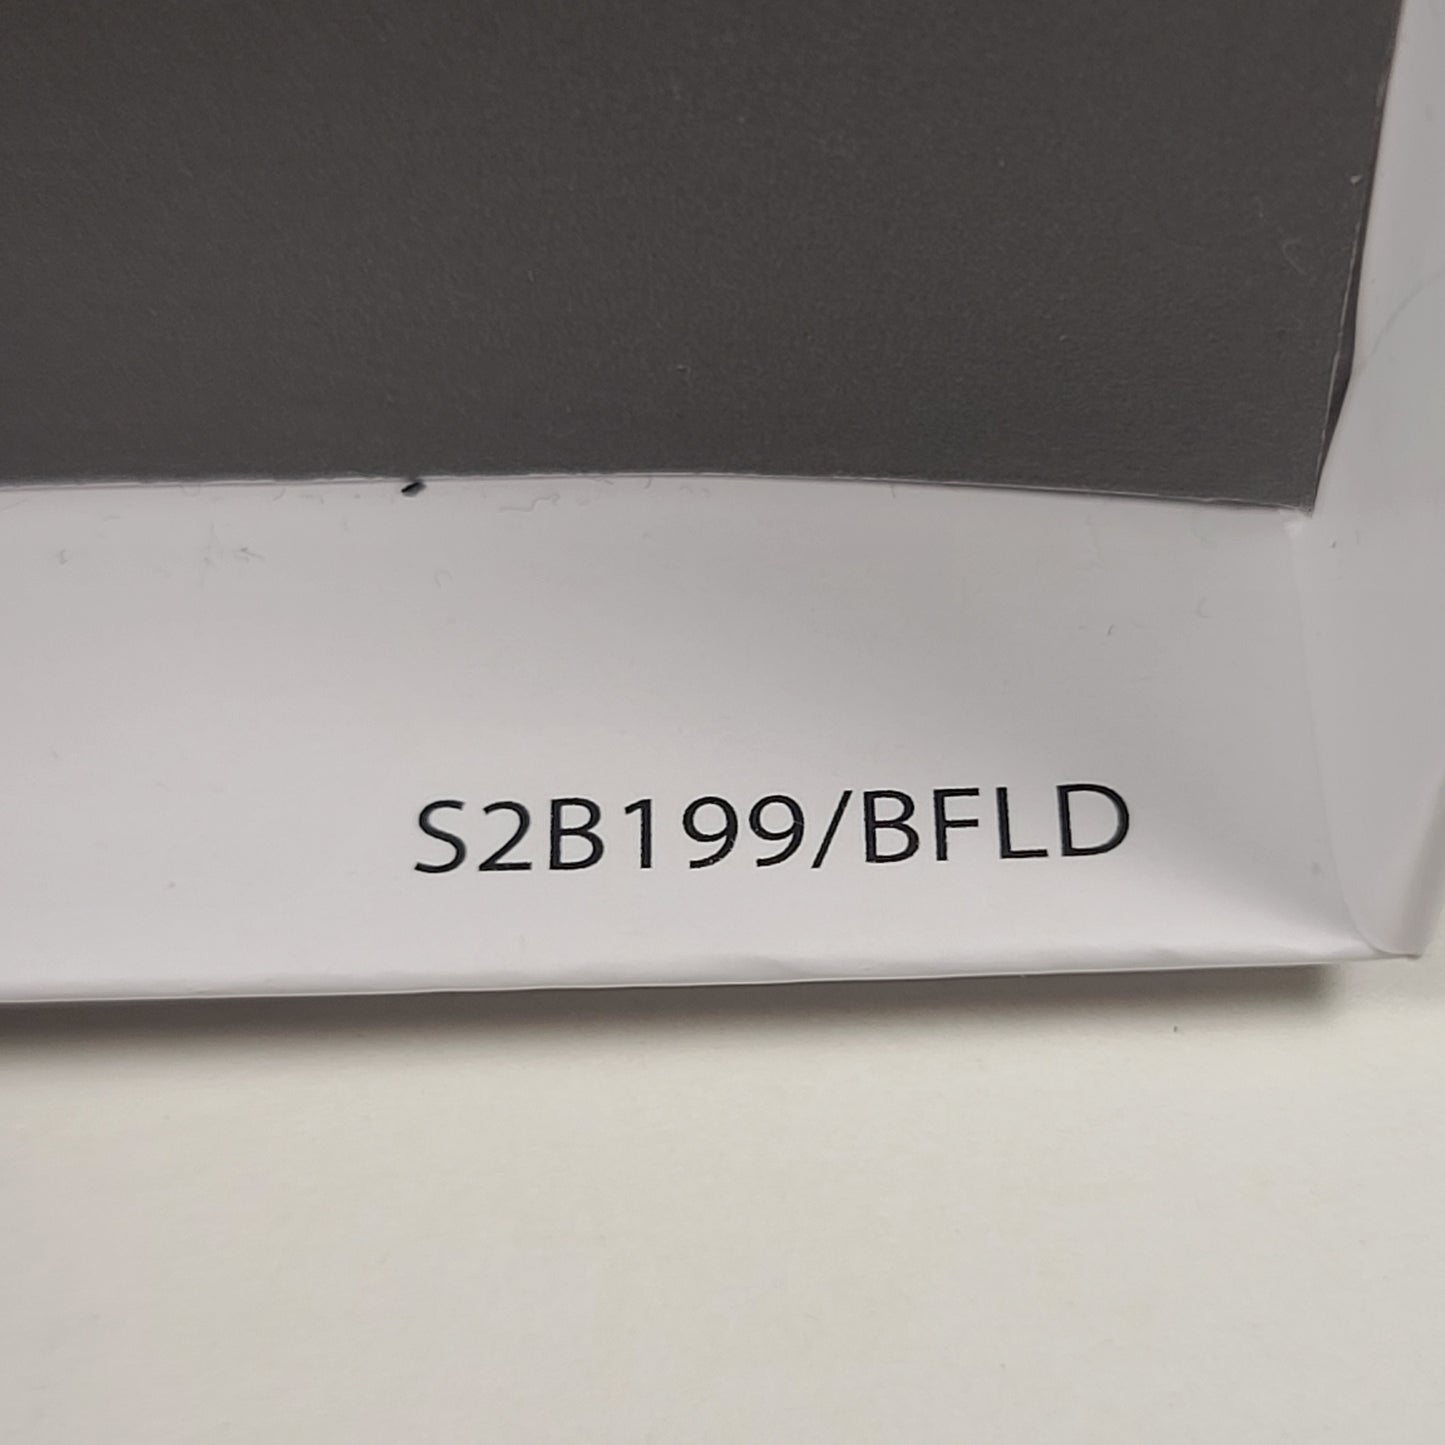 Steve Madden Men’s Billfold Black Leather Wallet With Back ID RFID N80093/08 - Wallets